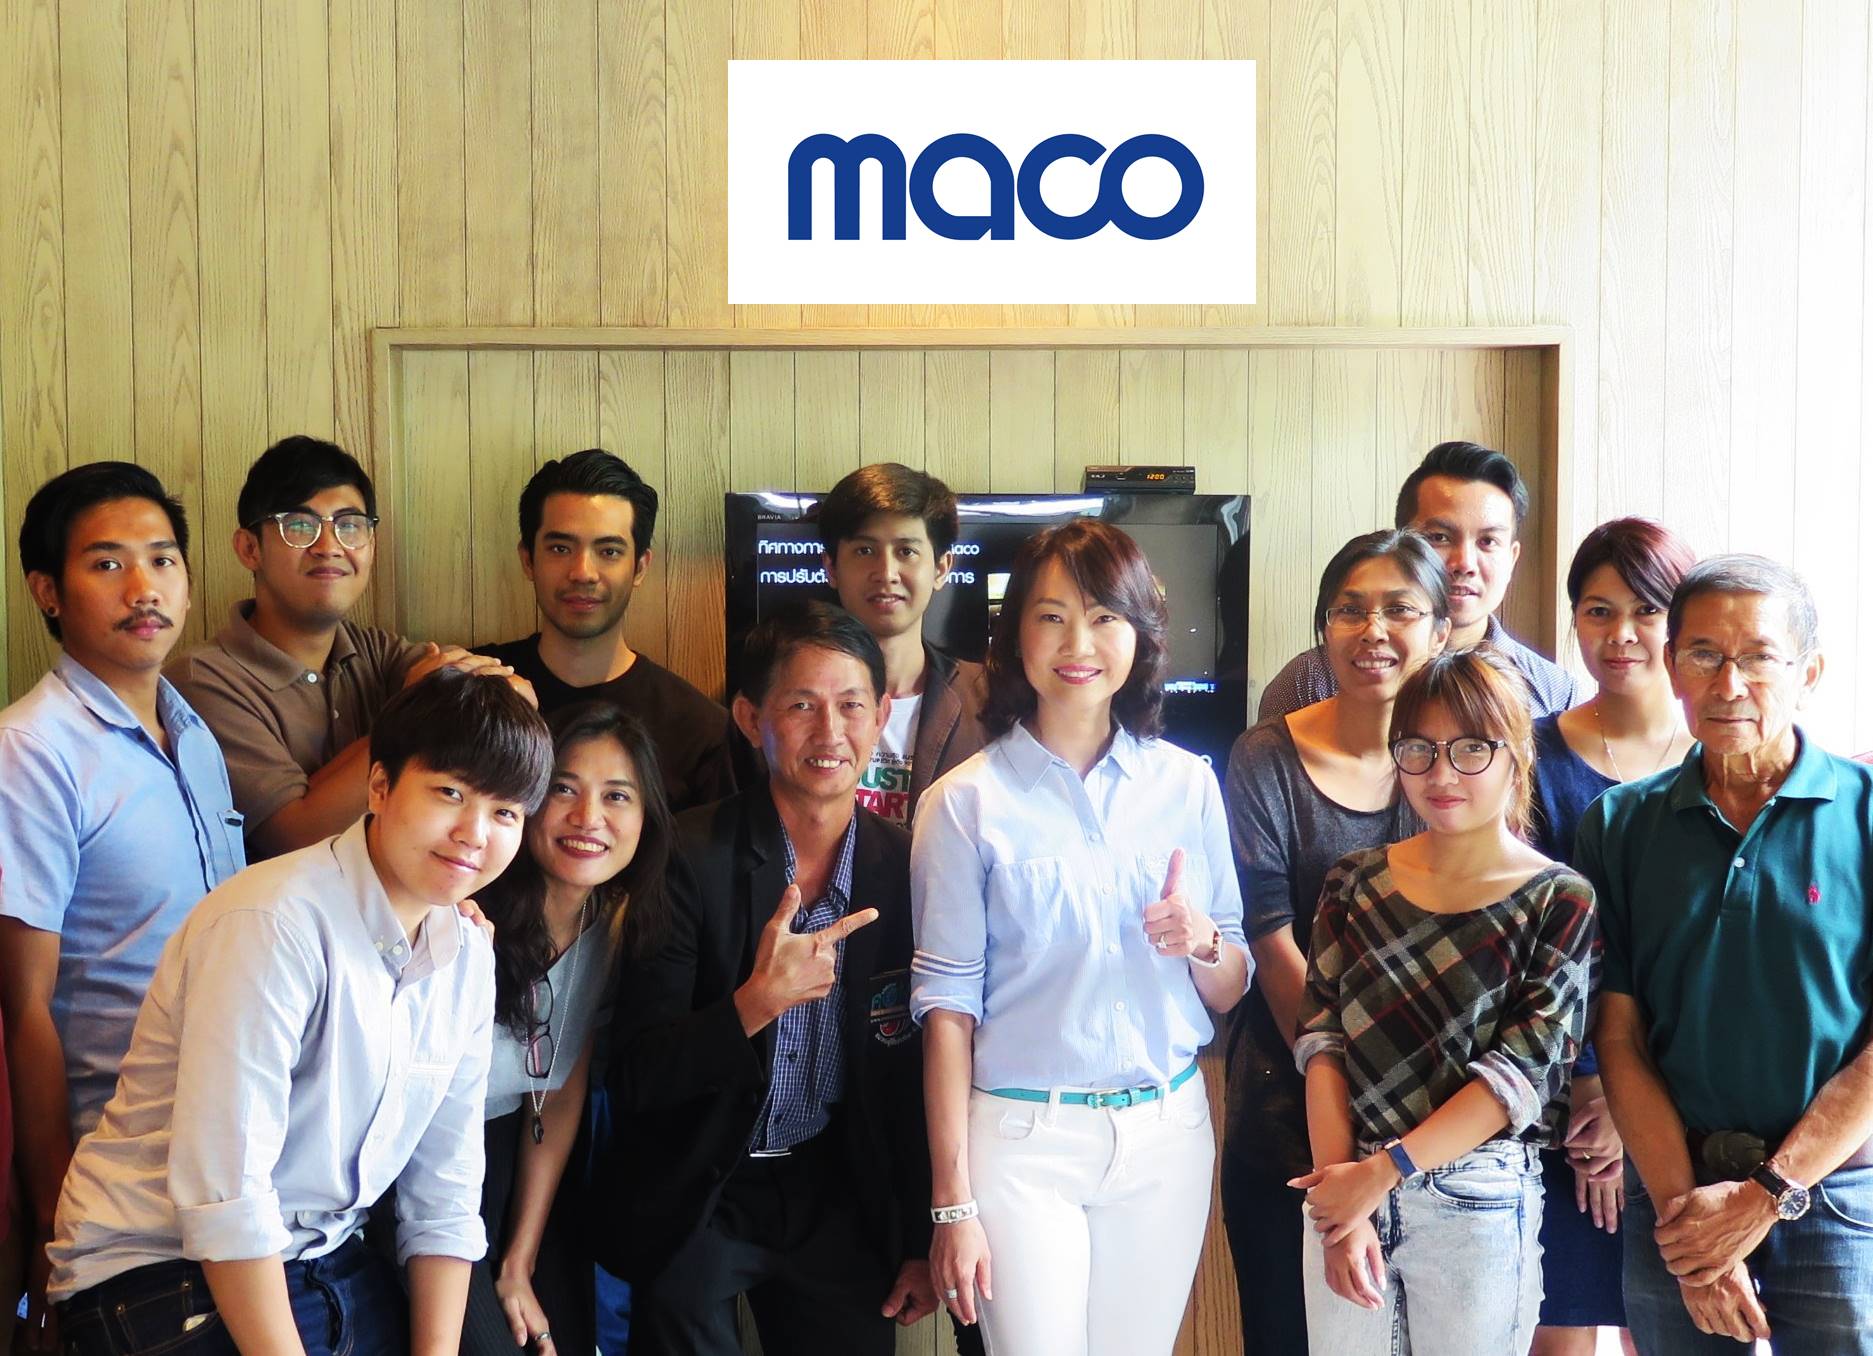 MACO เปิดตัว CEO คนใหม่ เชิญสื่อมวลชนร่วมพูดคุย เพื่อรับฟังวิสัยทัศน์ 